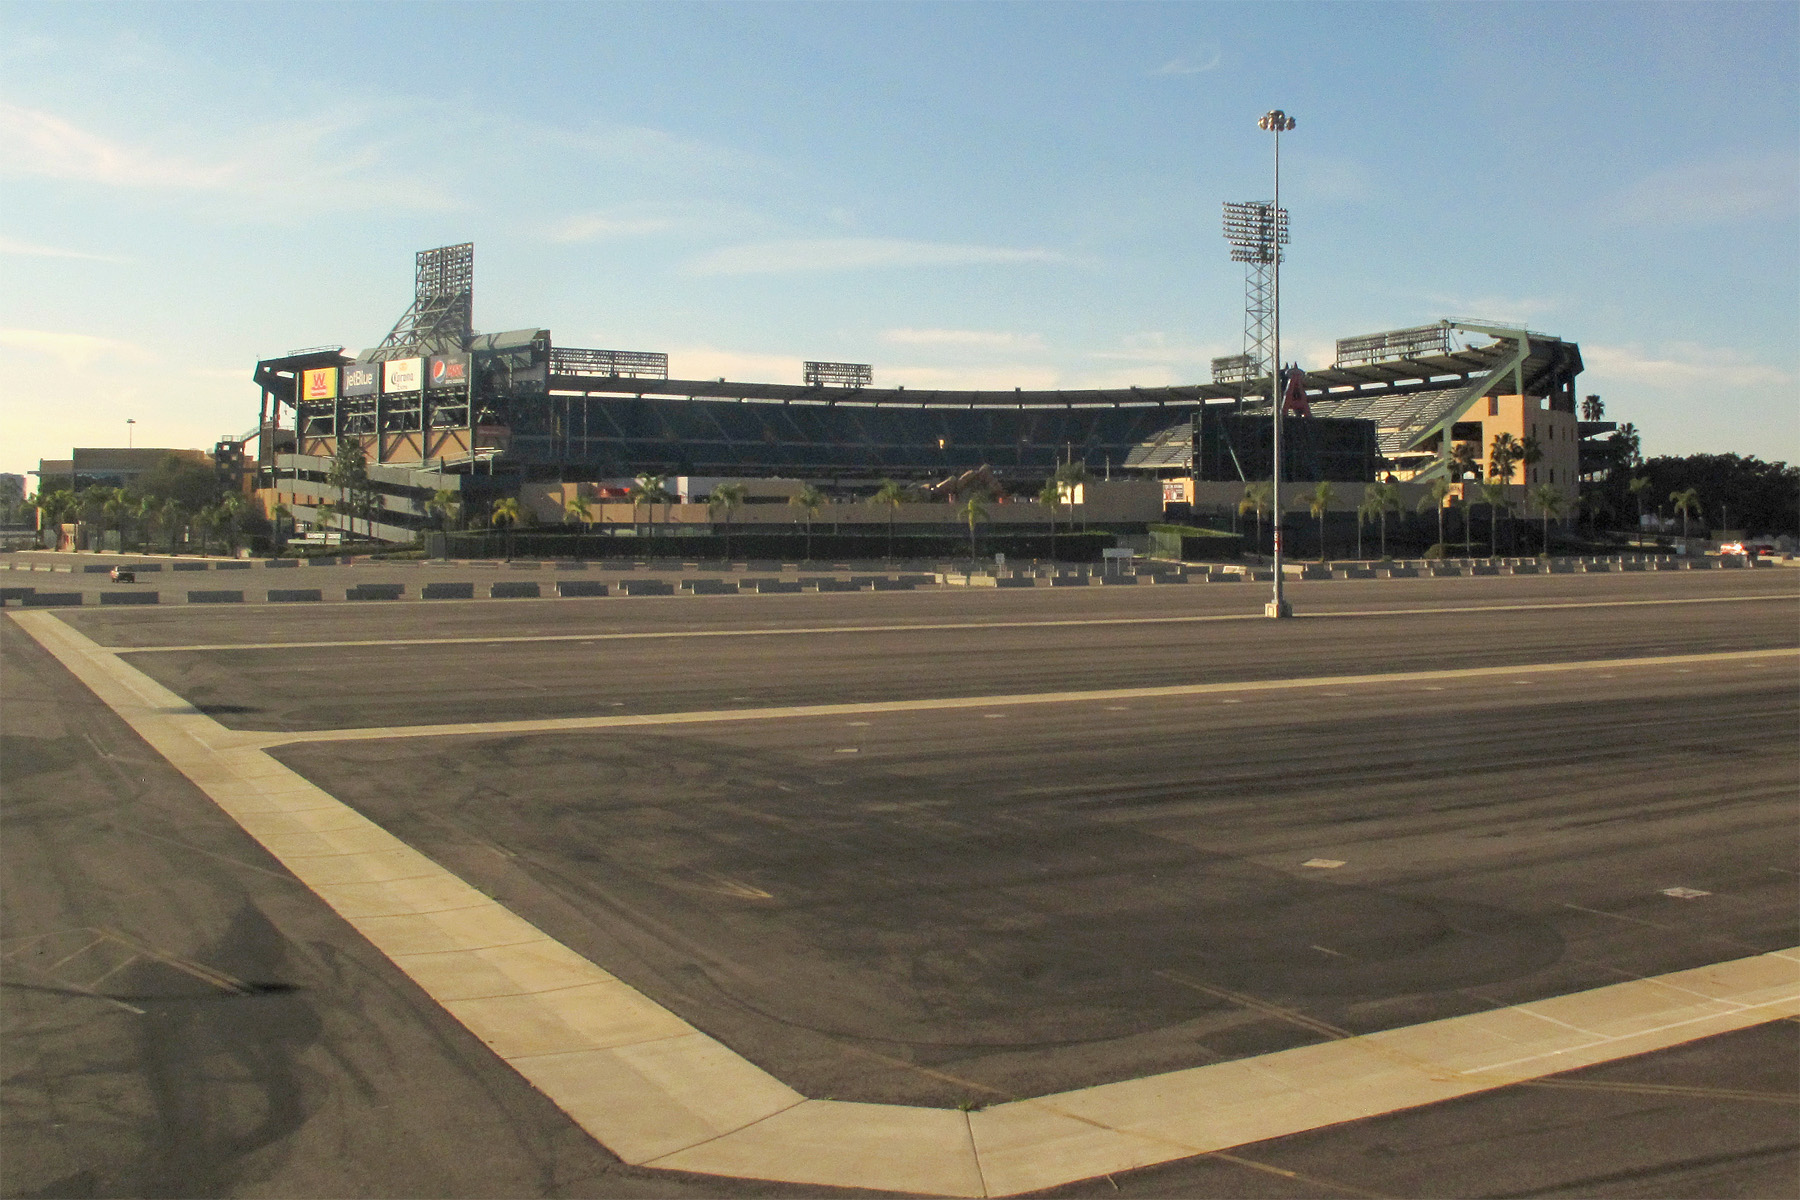 Baseball stadium viewed from a parking lot.